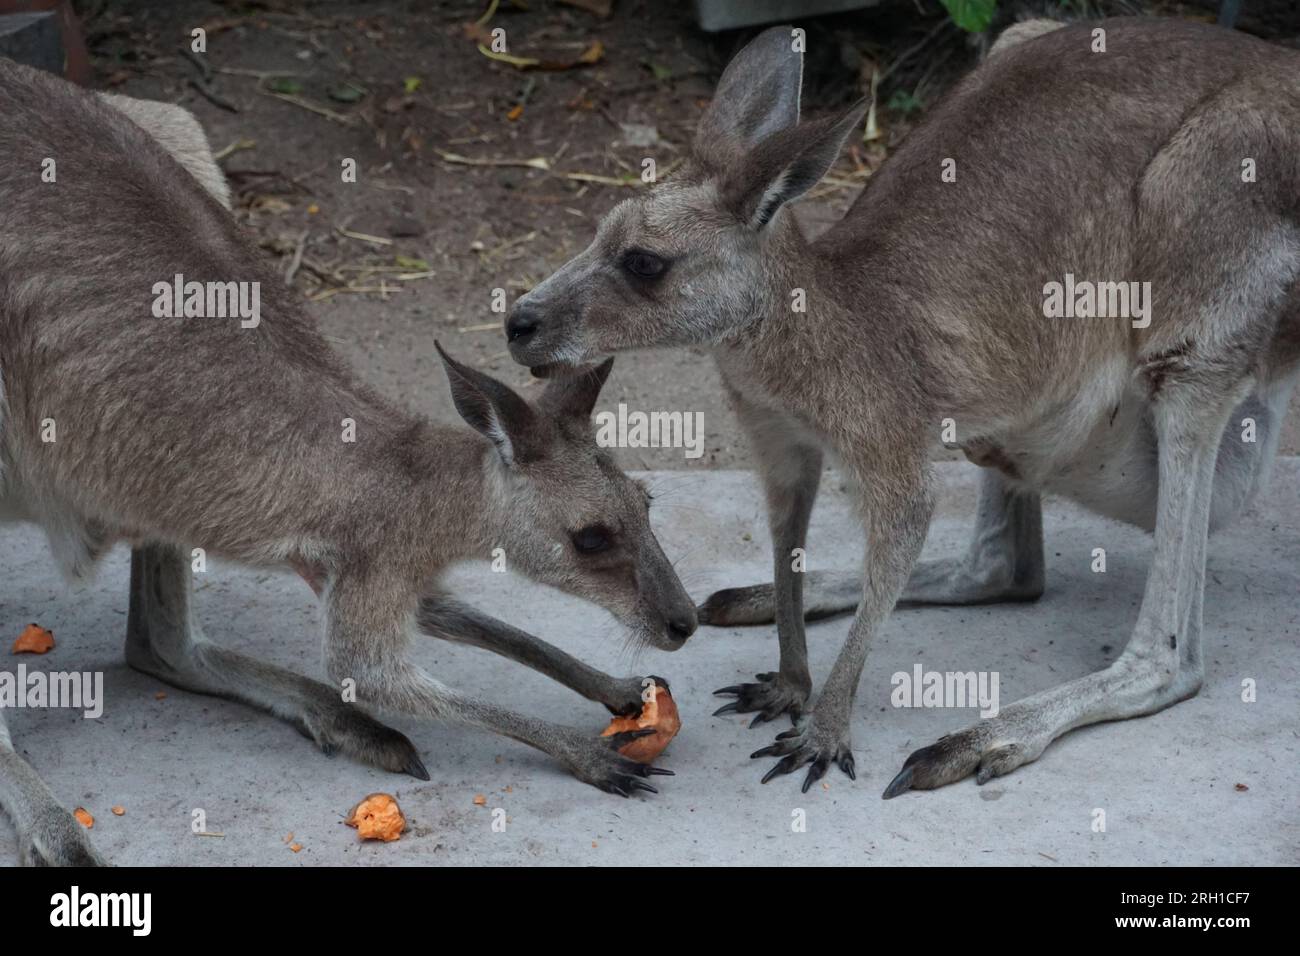 two eastern grey kangaroos (macropus giganteus), native australian marsupial, eating sweet potatoes in a kangaroo sanctuary in queensland, australia Stock Photo